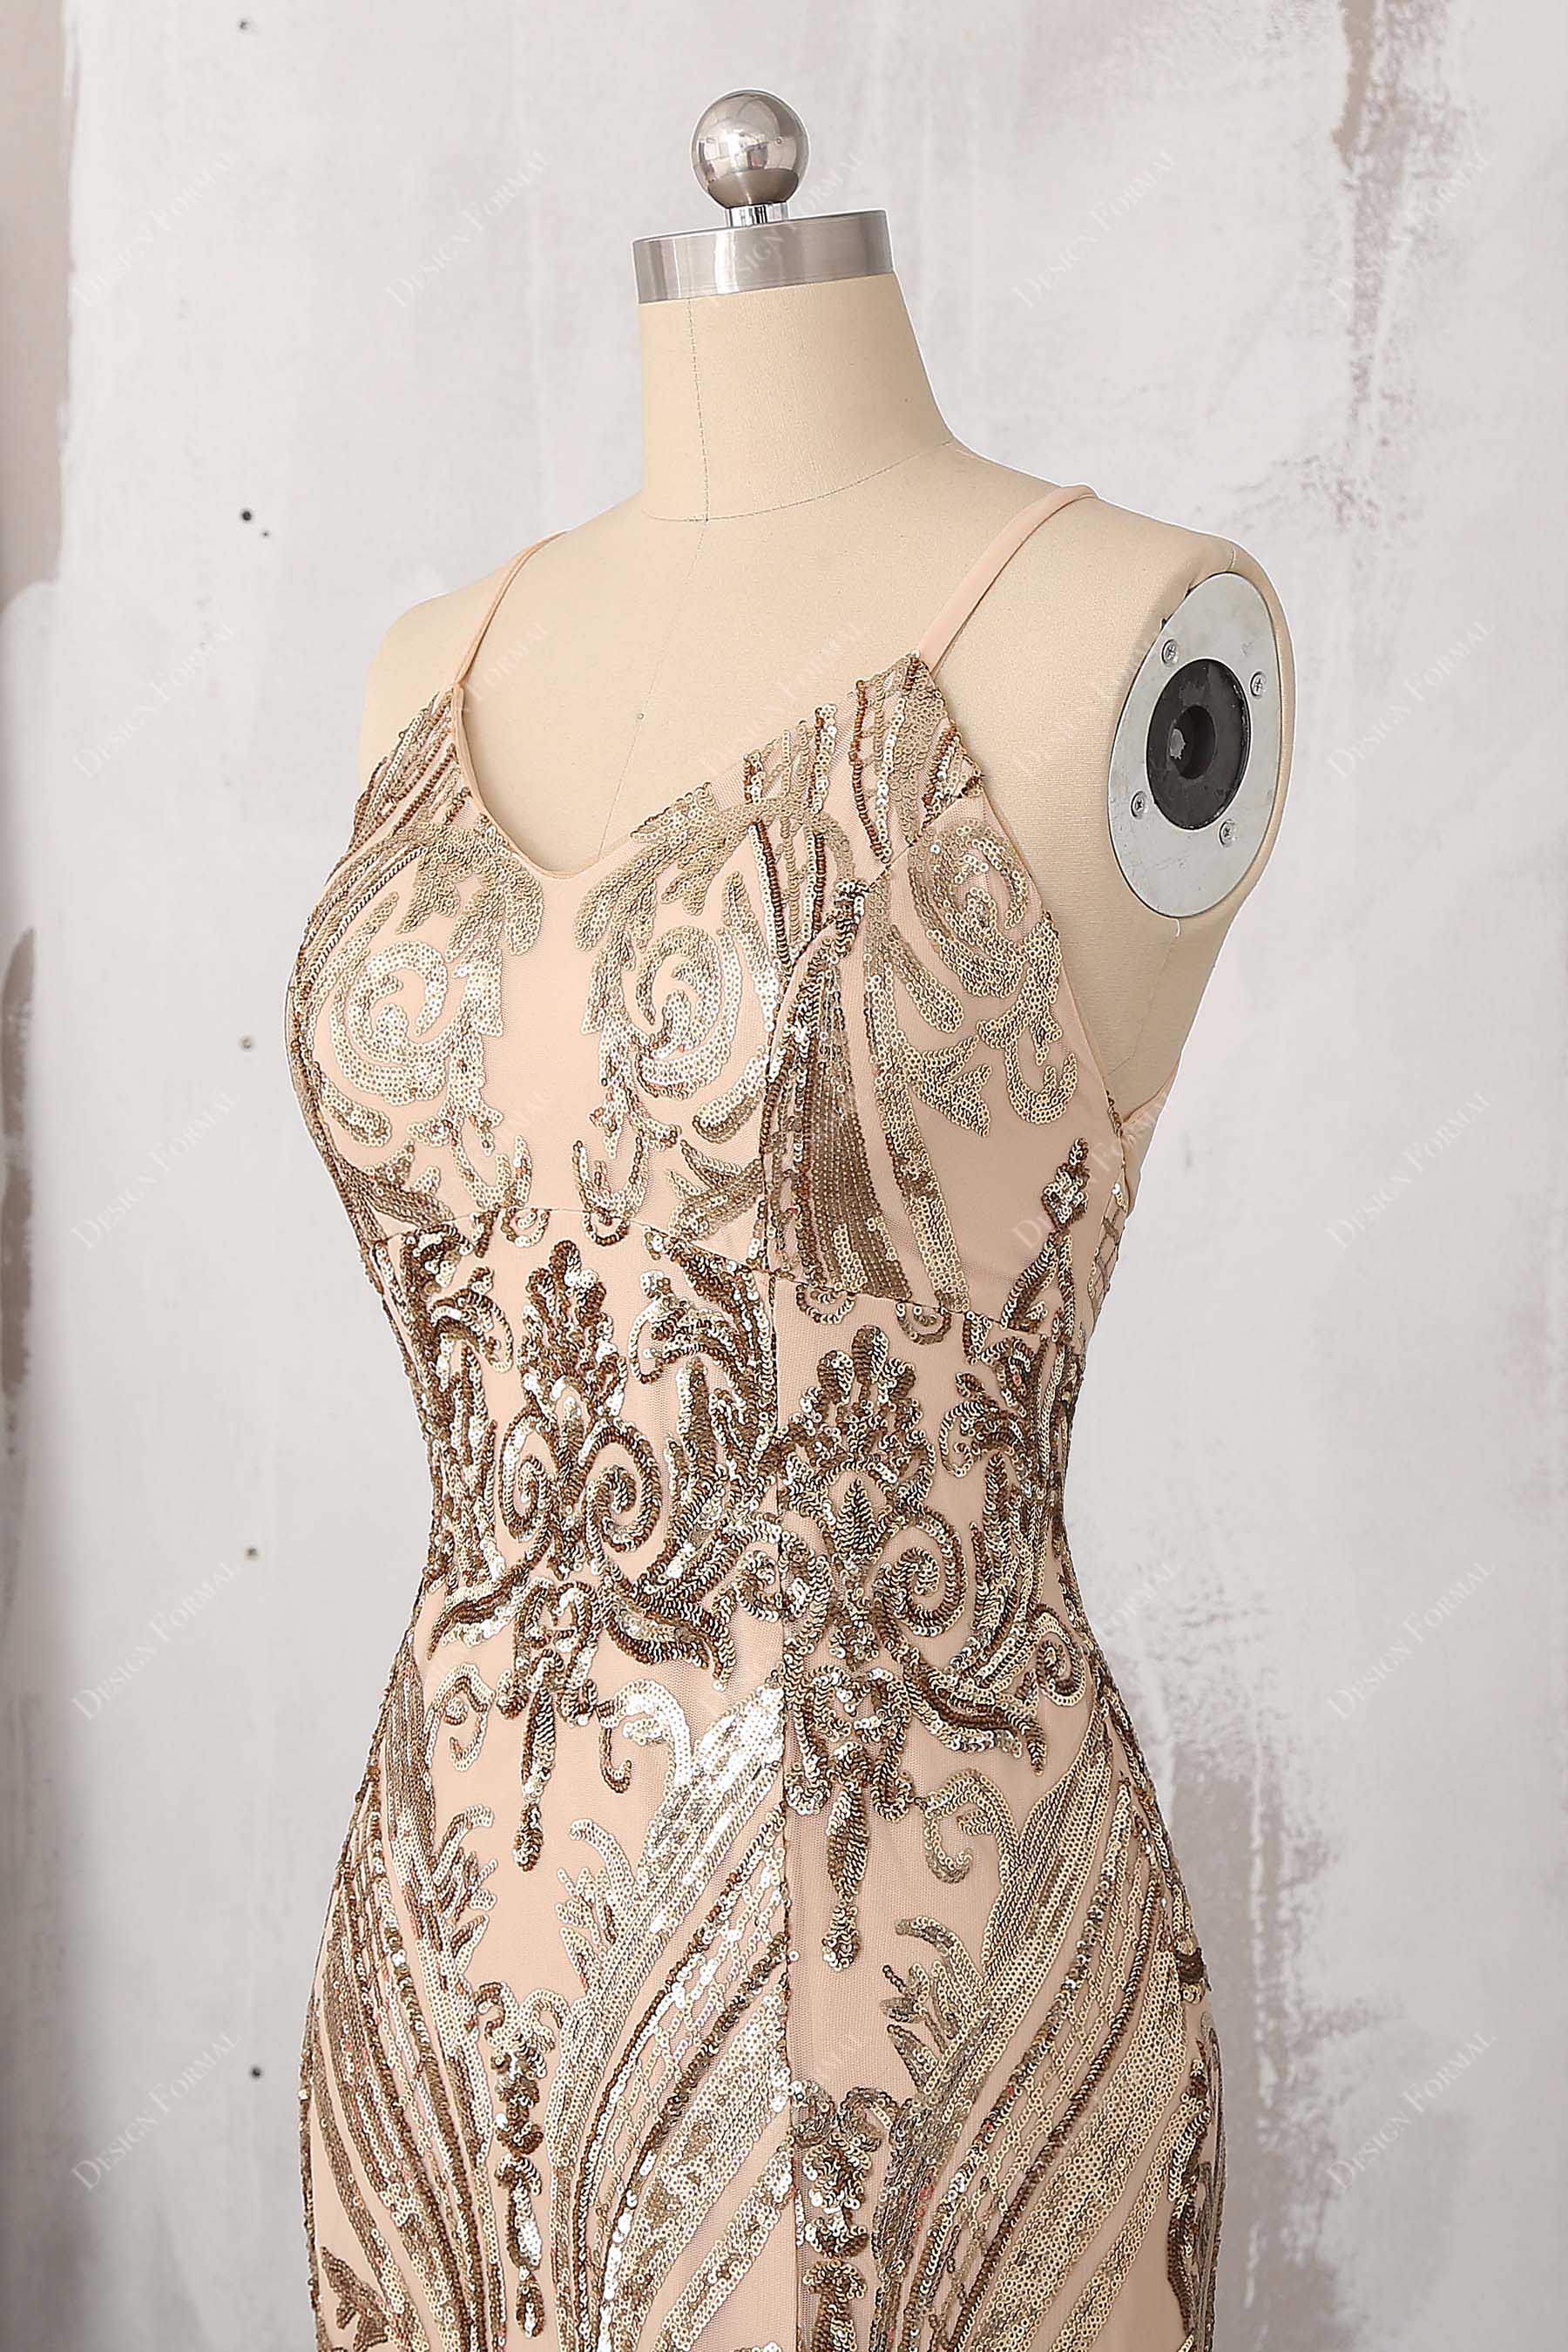 V-neck thin straps gold sequin prom dress